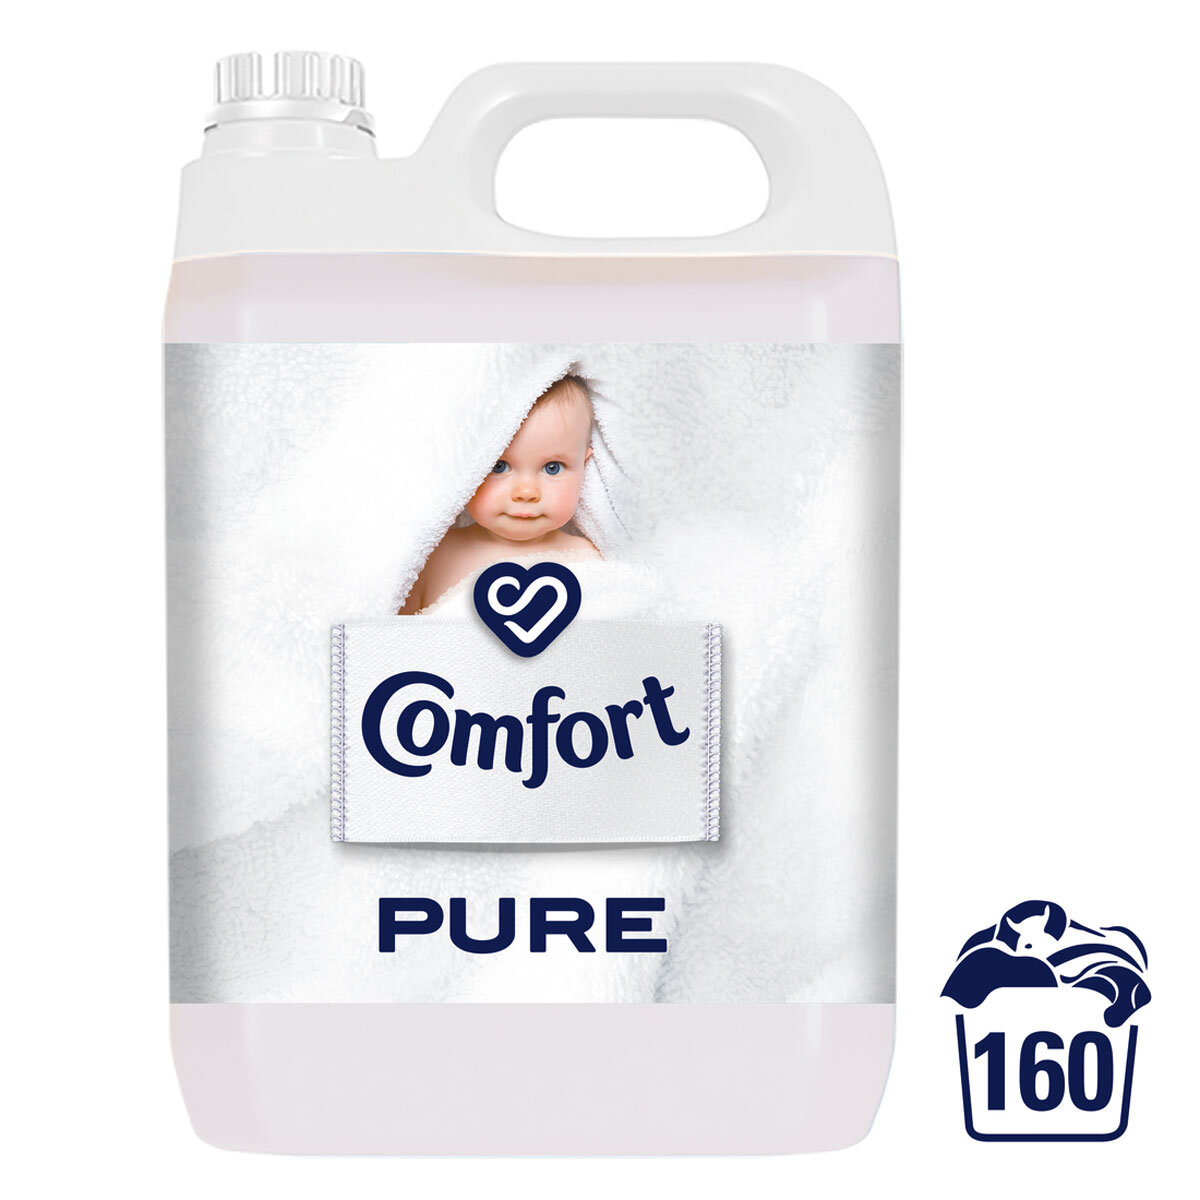 Comfort Pure Fabric Conditioner (160 Wash) 4.8L